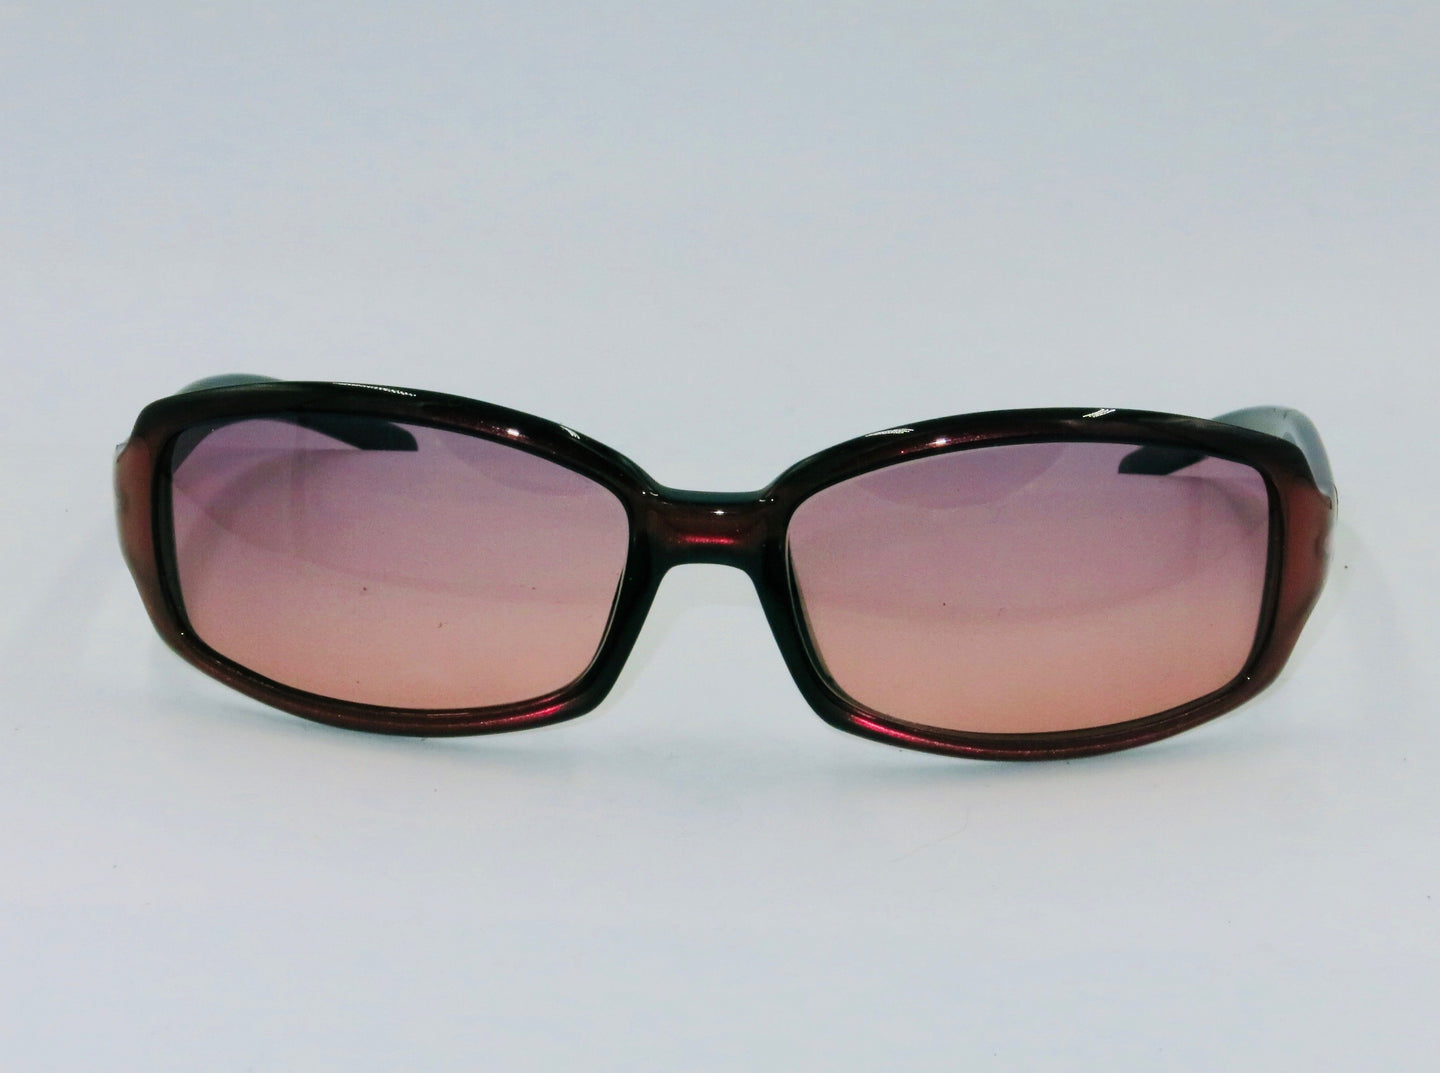 Fendi Sunglasses FS 267 | Sunglasses by Fendi